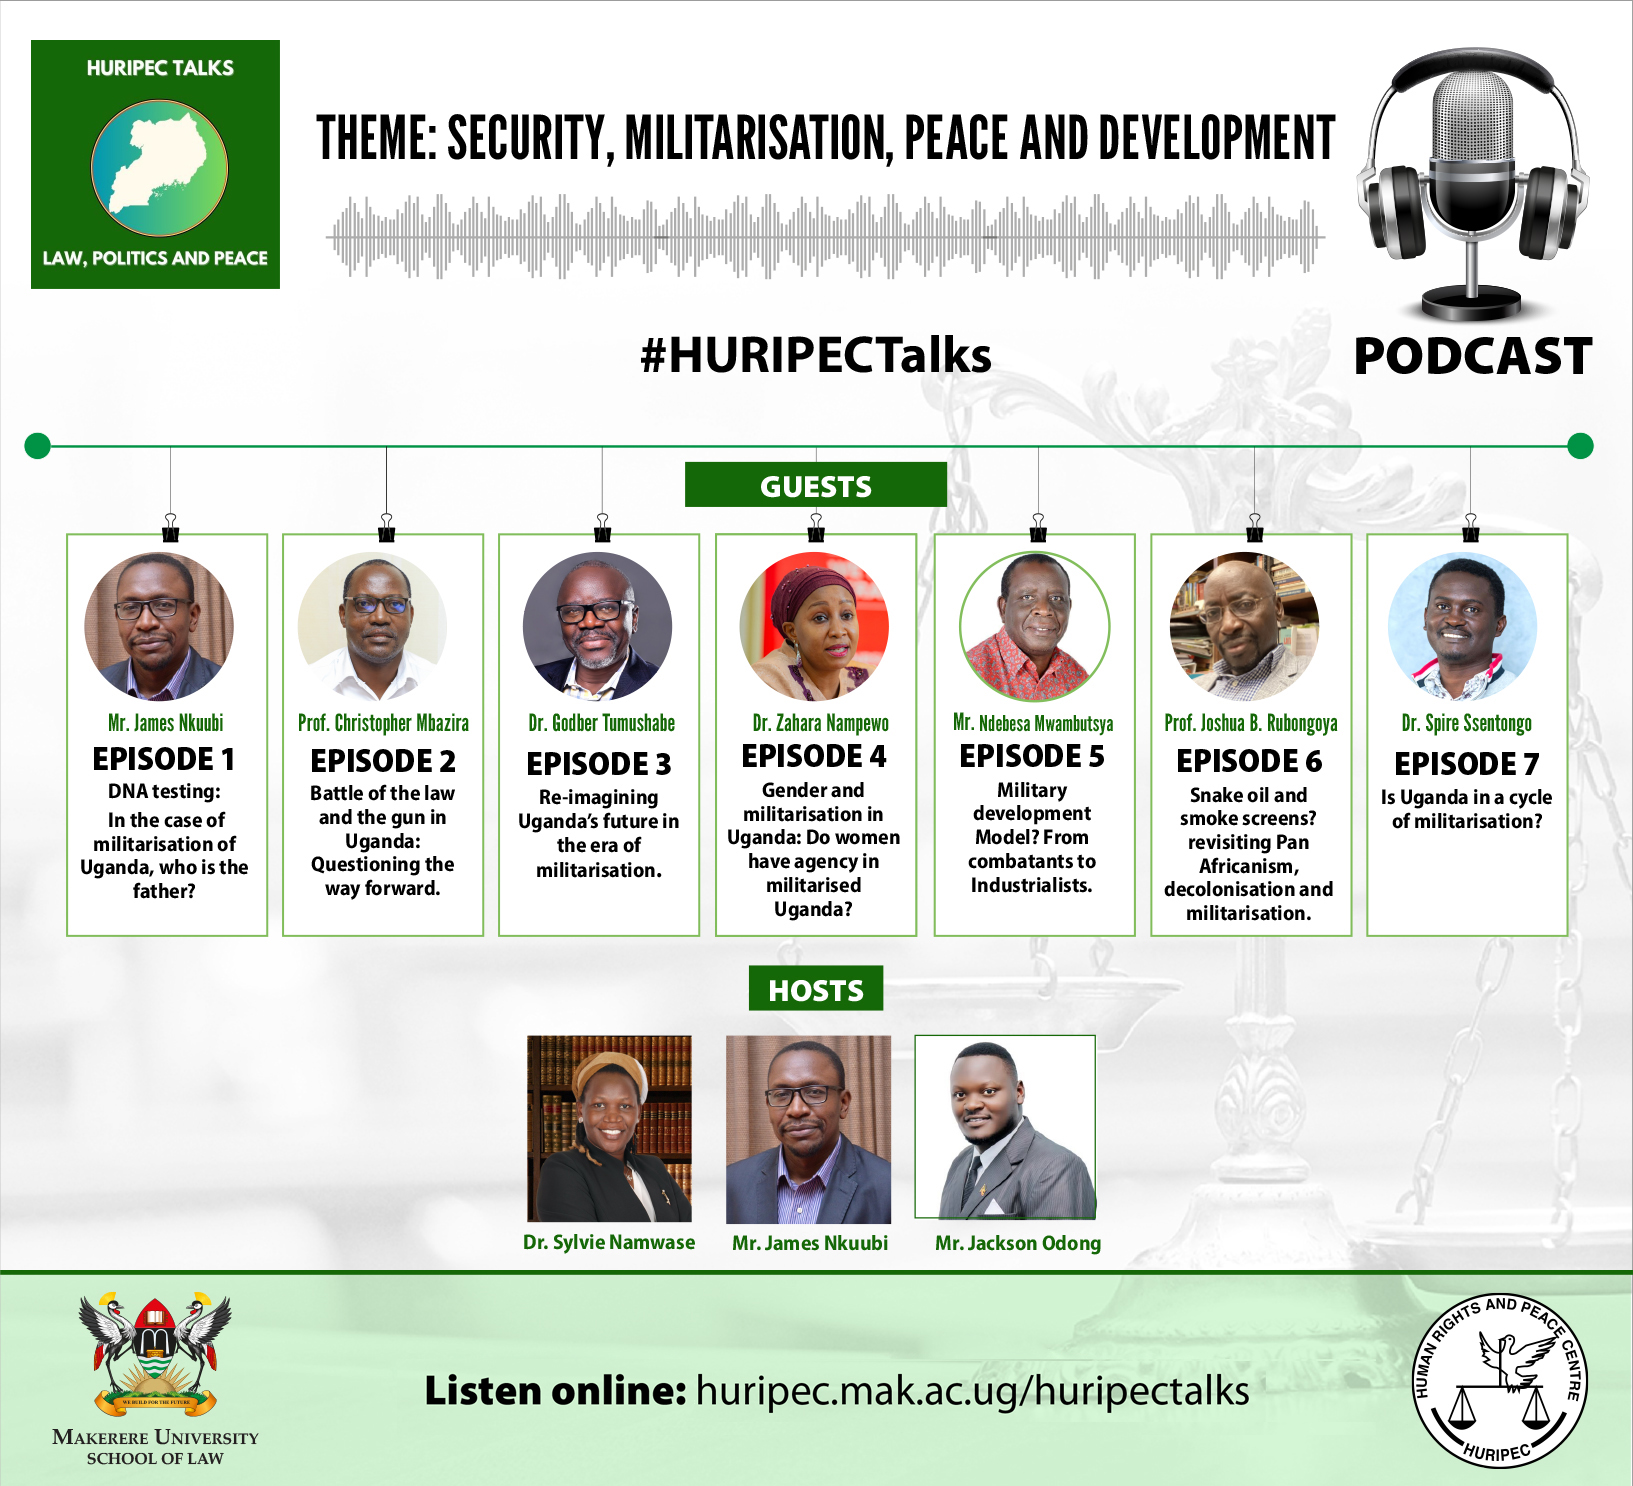 #HURIPECTalks: A Podcast by HURIPEC featuring; Mr. James Nkuubi, Prof. Christopher Mbazira, Dr. Godber Tumushabe, Dr. Zahara Nampewo, Mr. Ndebesa Mwabutsya, Prof. Joshua B. Rubongoya, and Dr. Jimmy Spire Ssentongo.